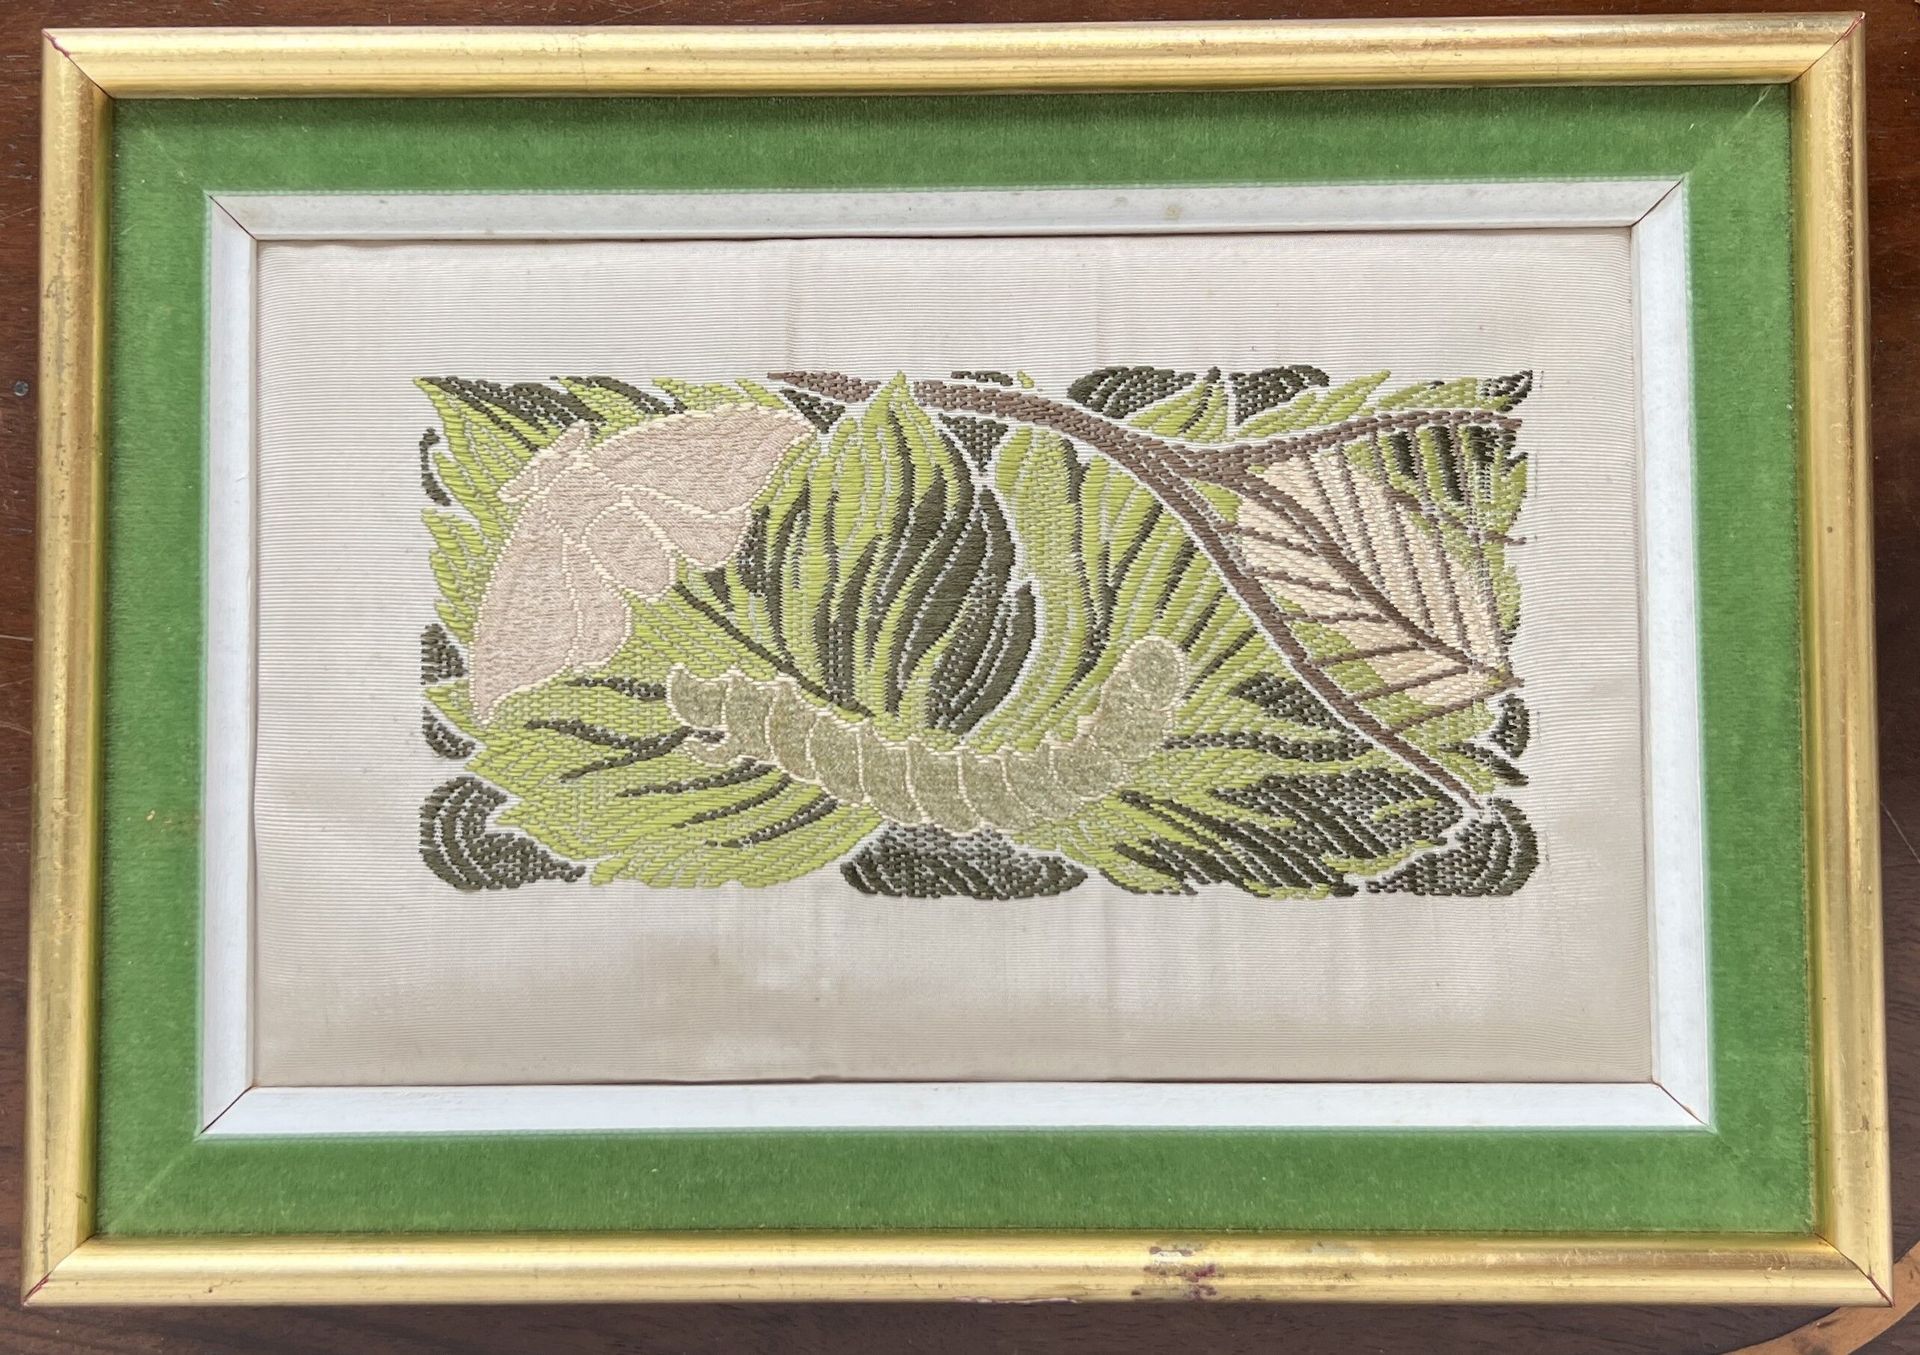 Null 20 世纪上半叶用蚕和蚕丝编织的绘画，多色丝绸灯塔、雪尼尔线和凹槽线。 
带框，13 x 21 厘米。